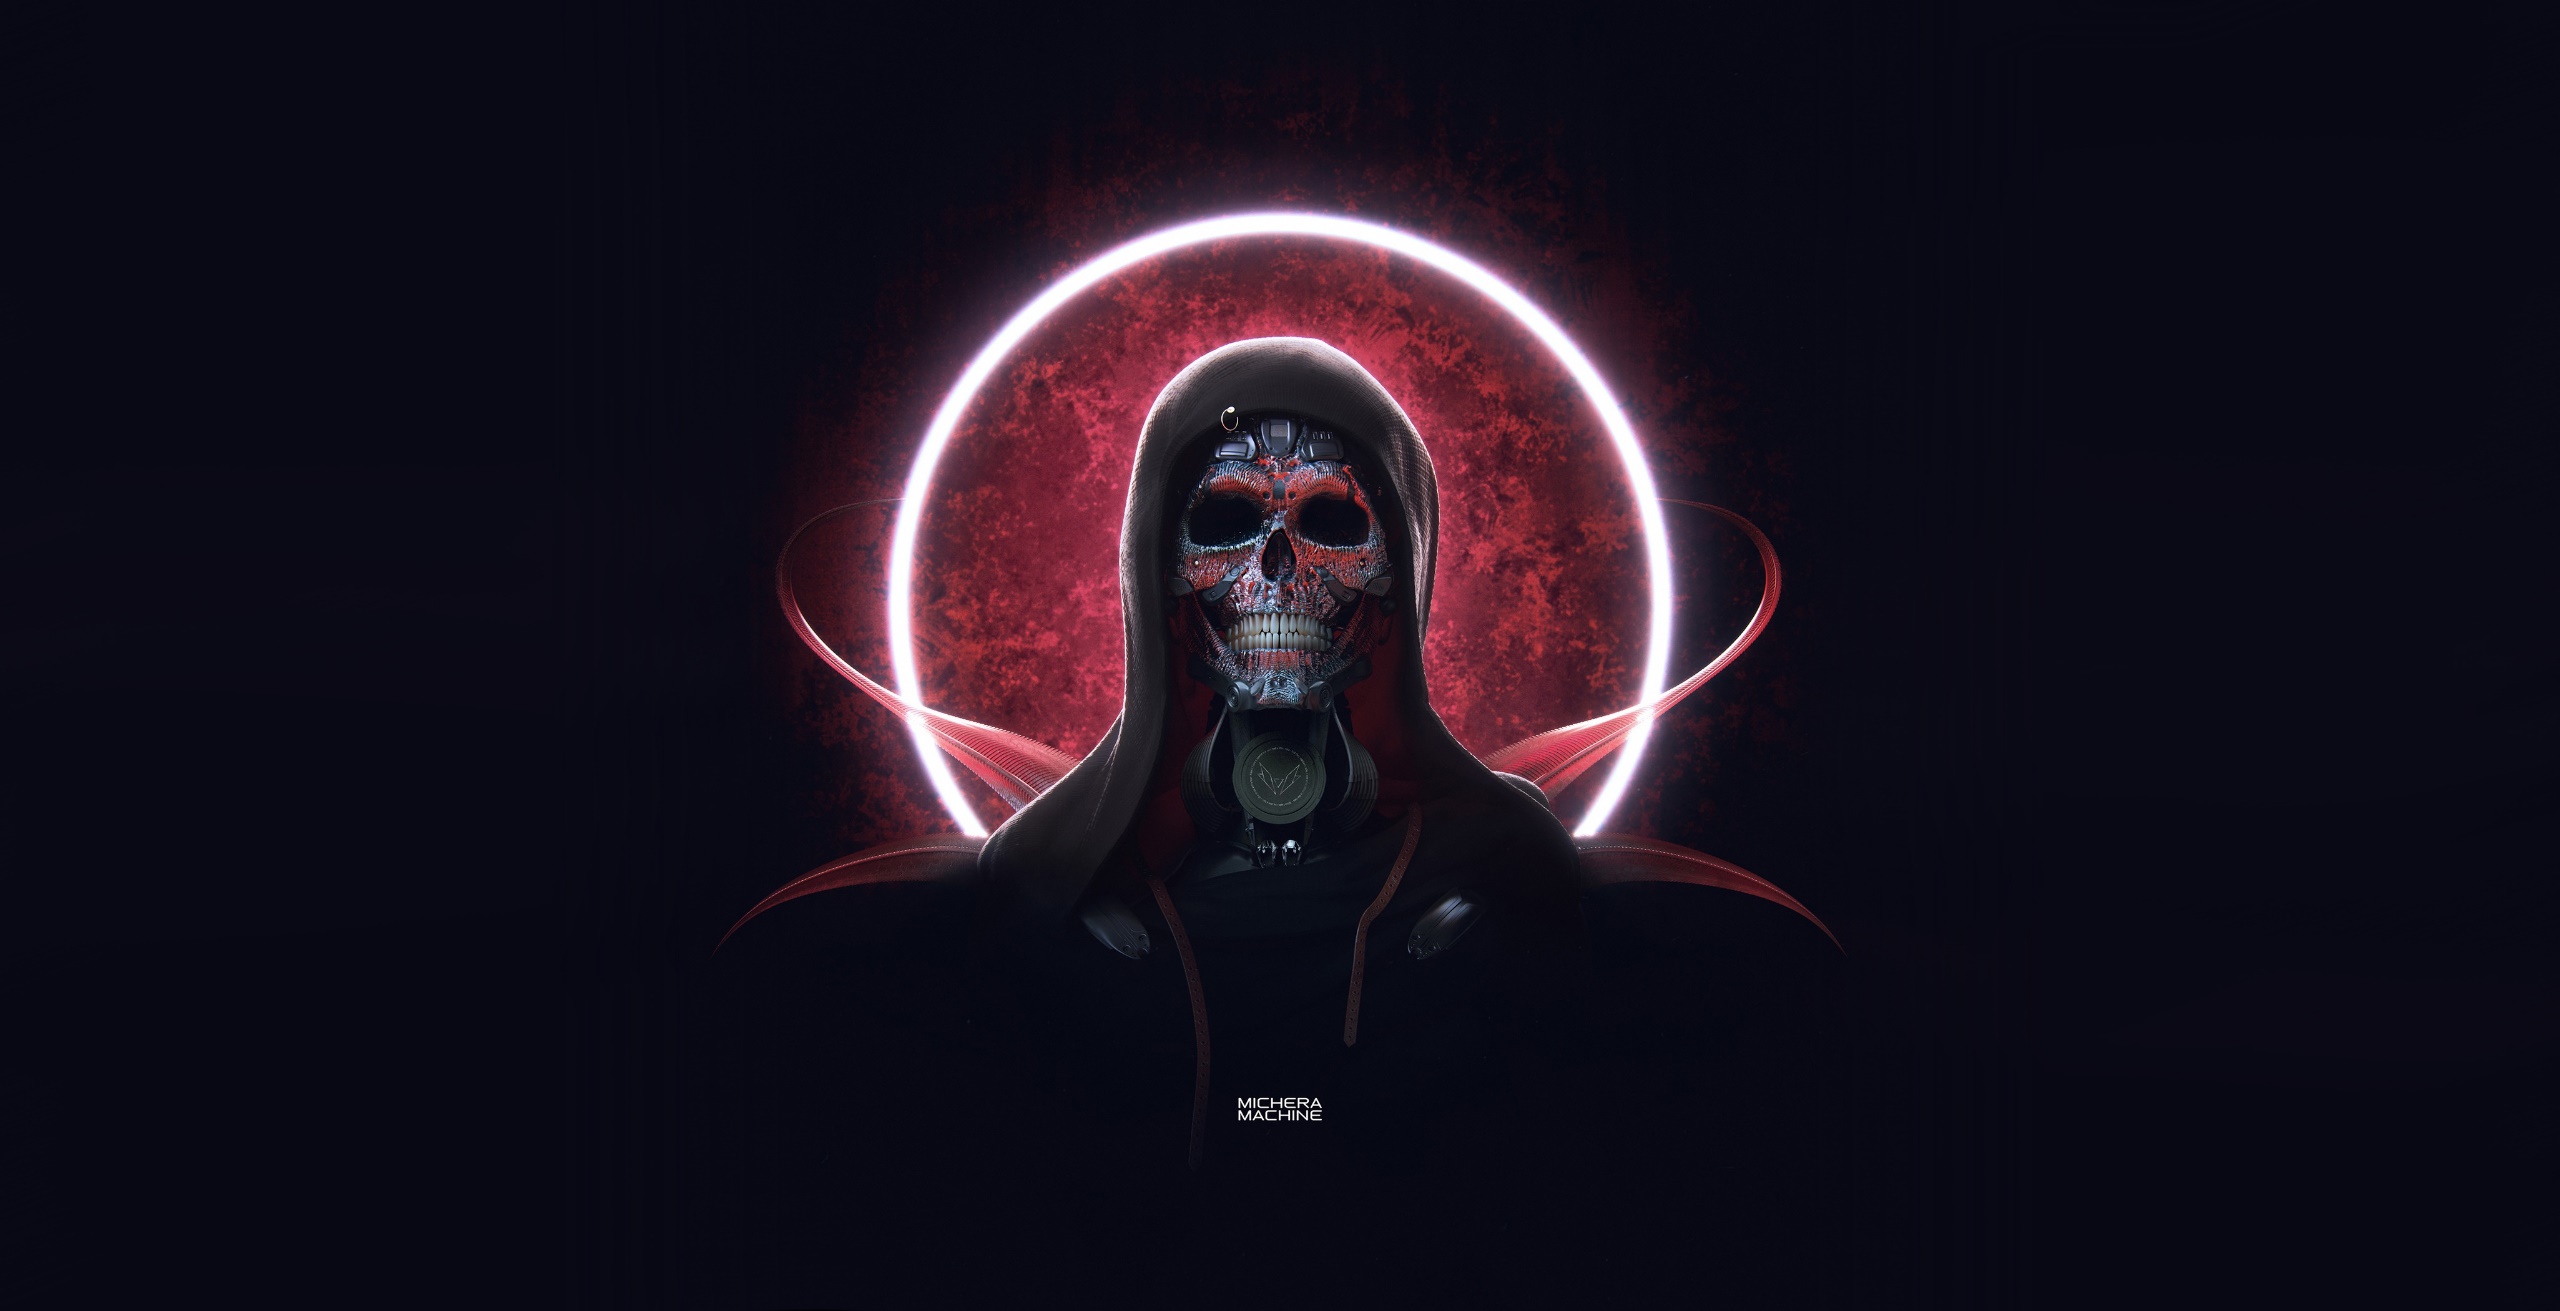 General 2560x1311 skull dark artwork Michael Michera red circle black background digital art watermarked simple background